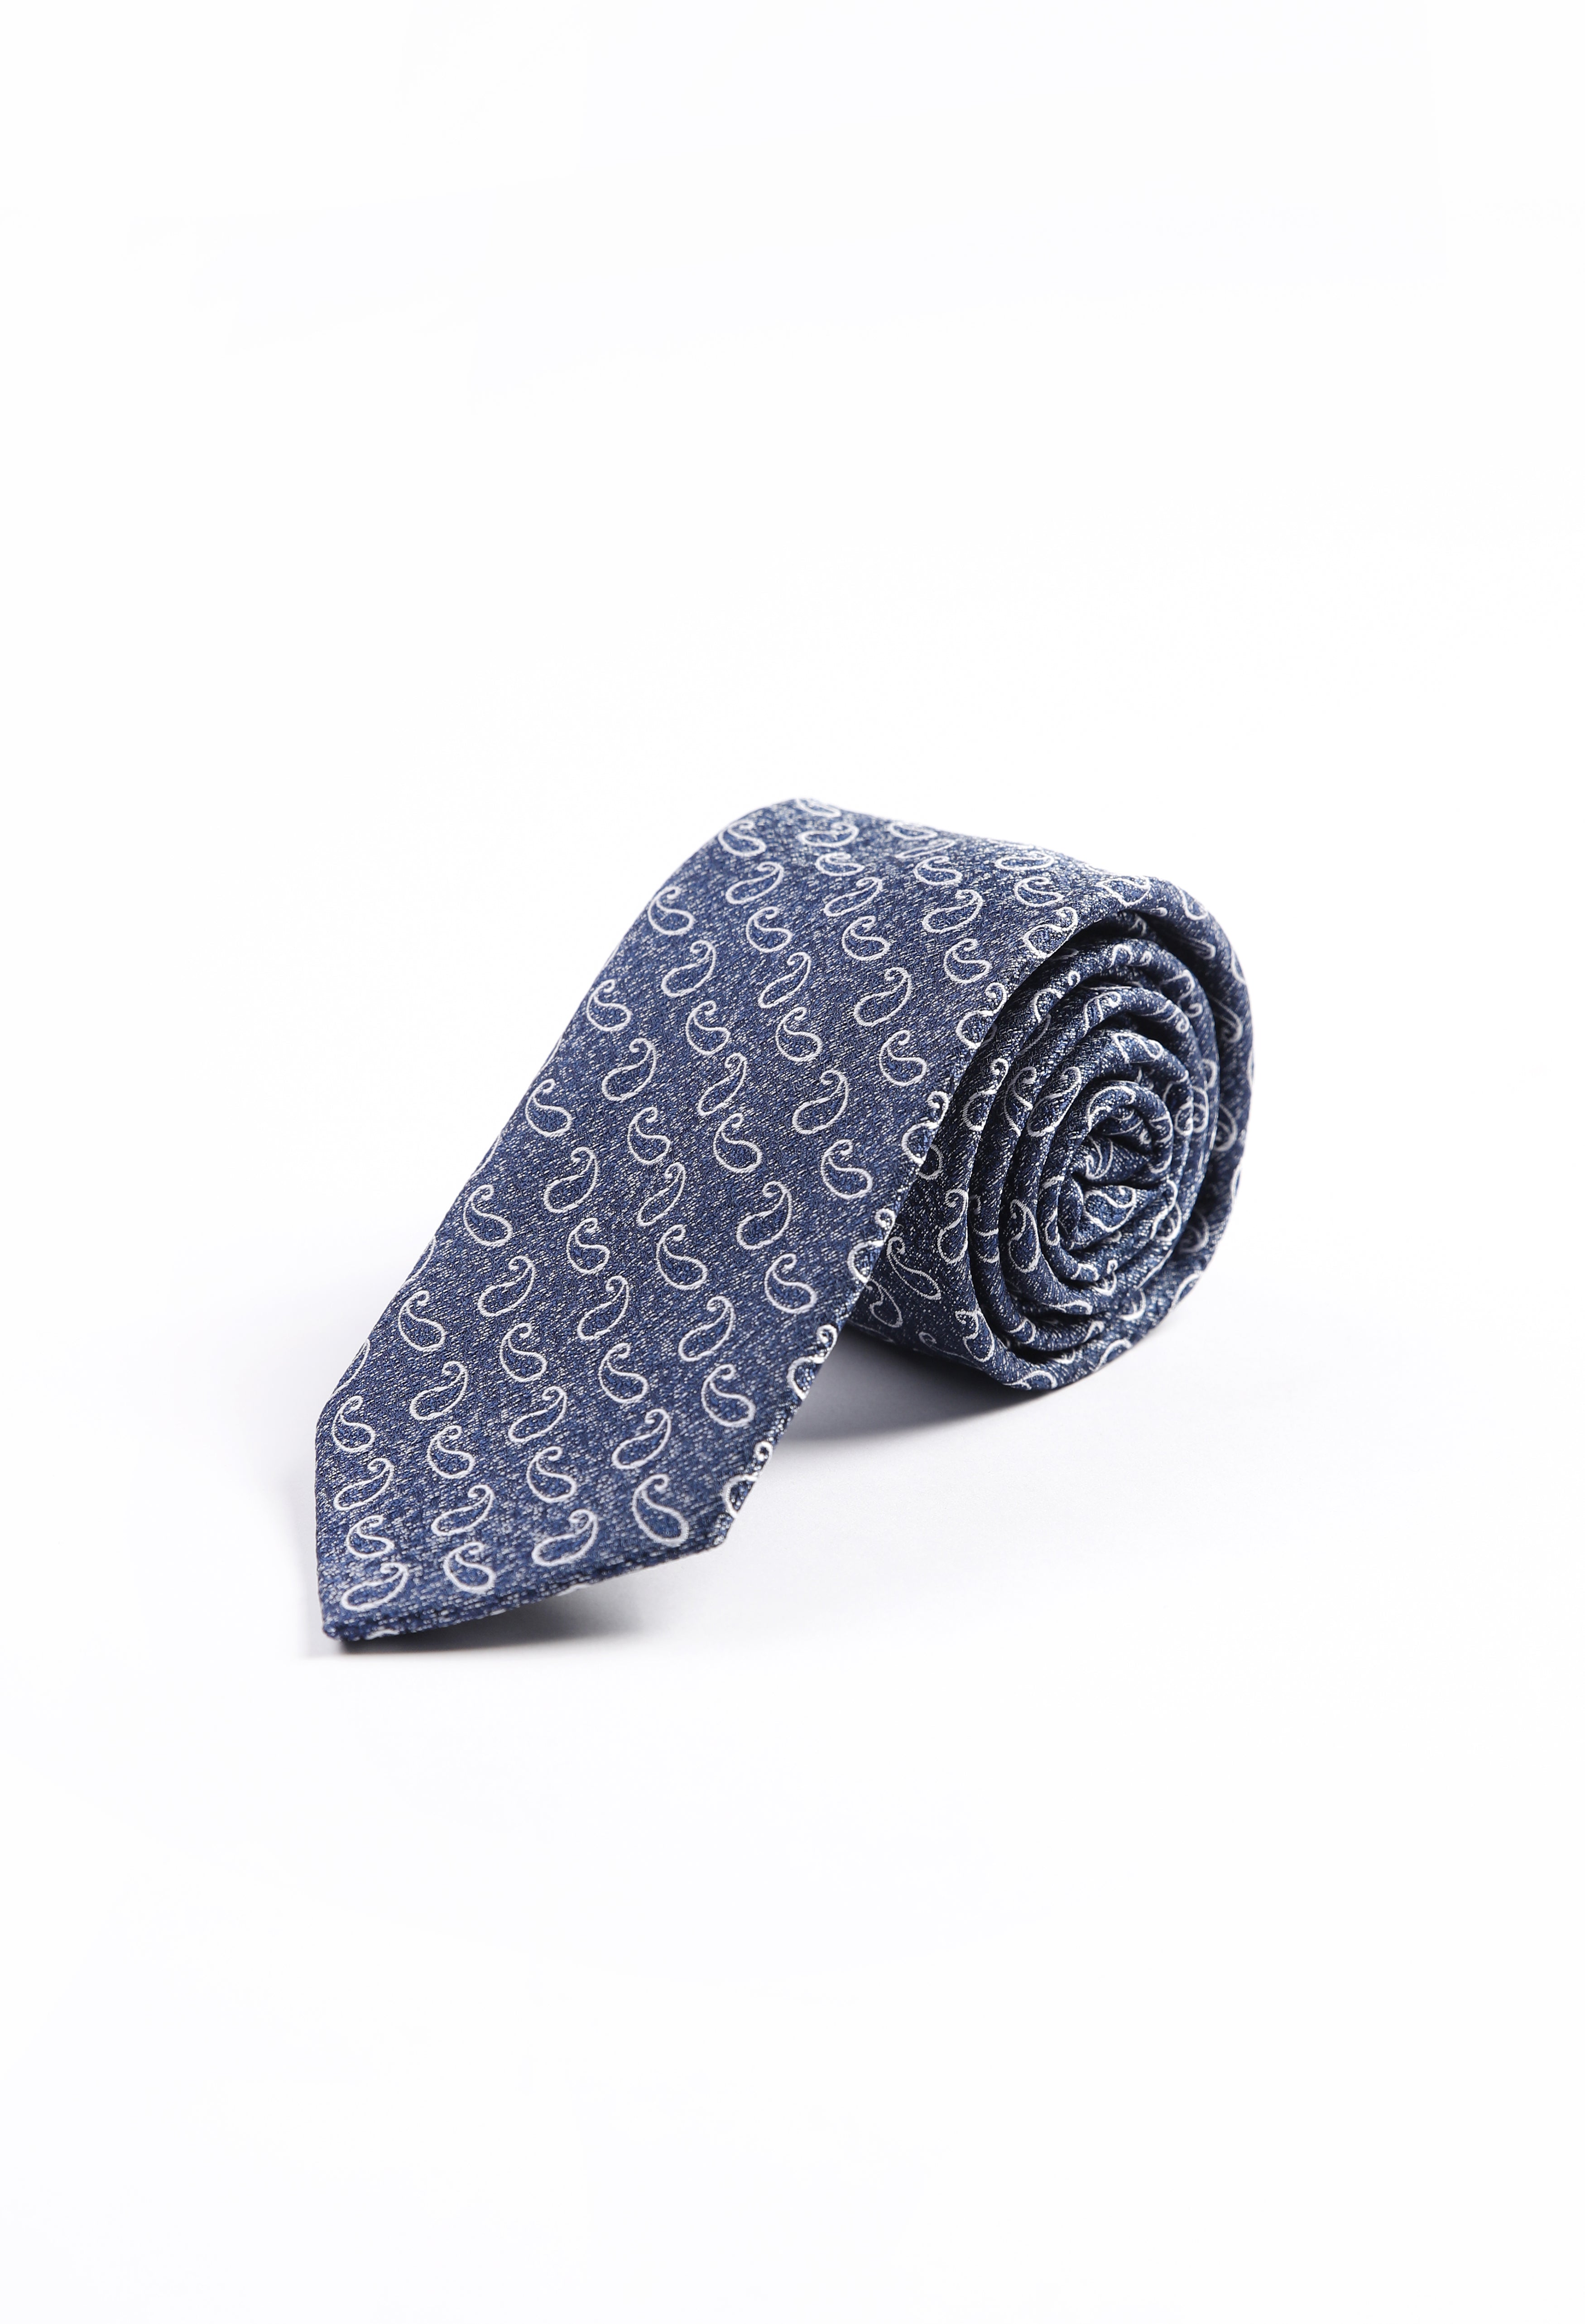 Philadelphia Blue Floral Tie (TIE-000031)